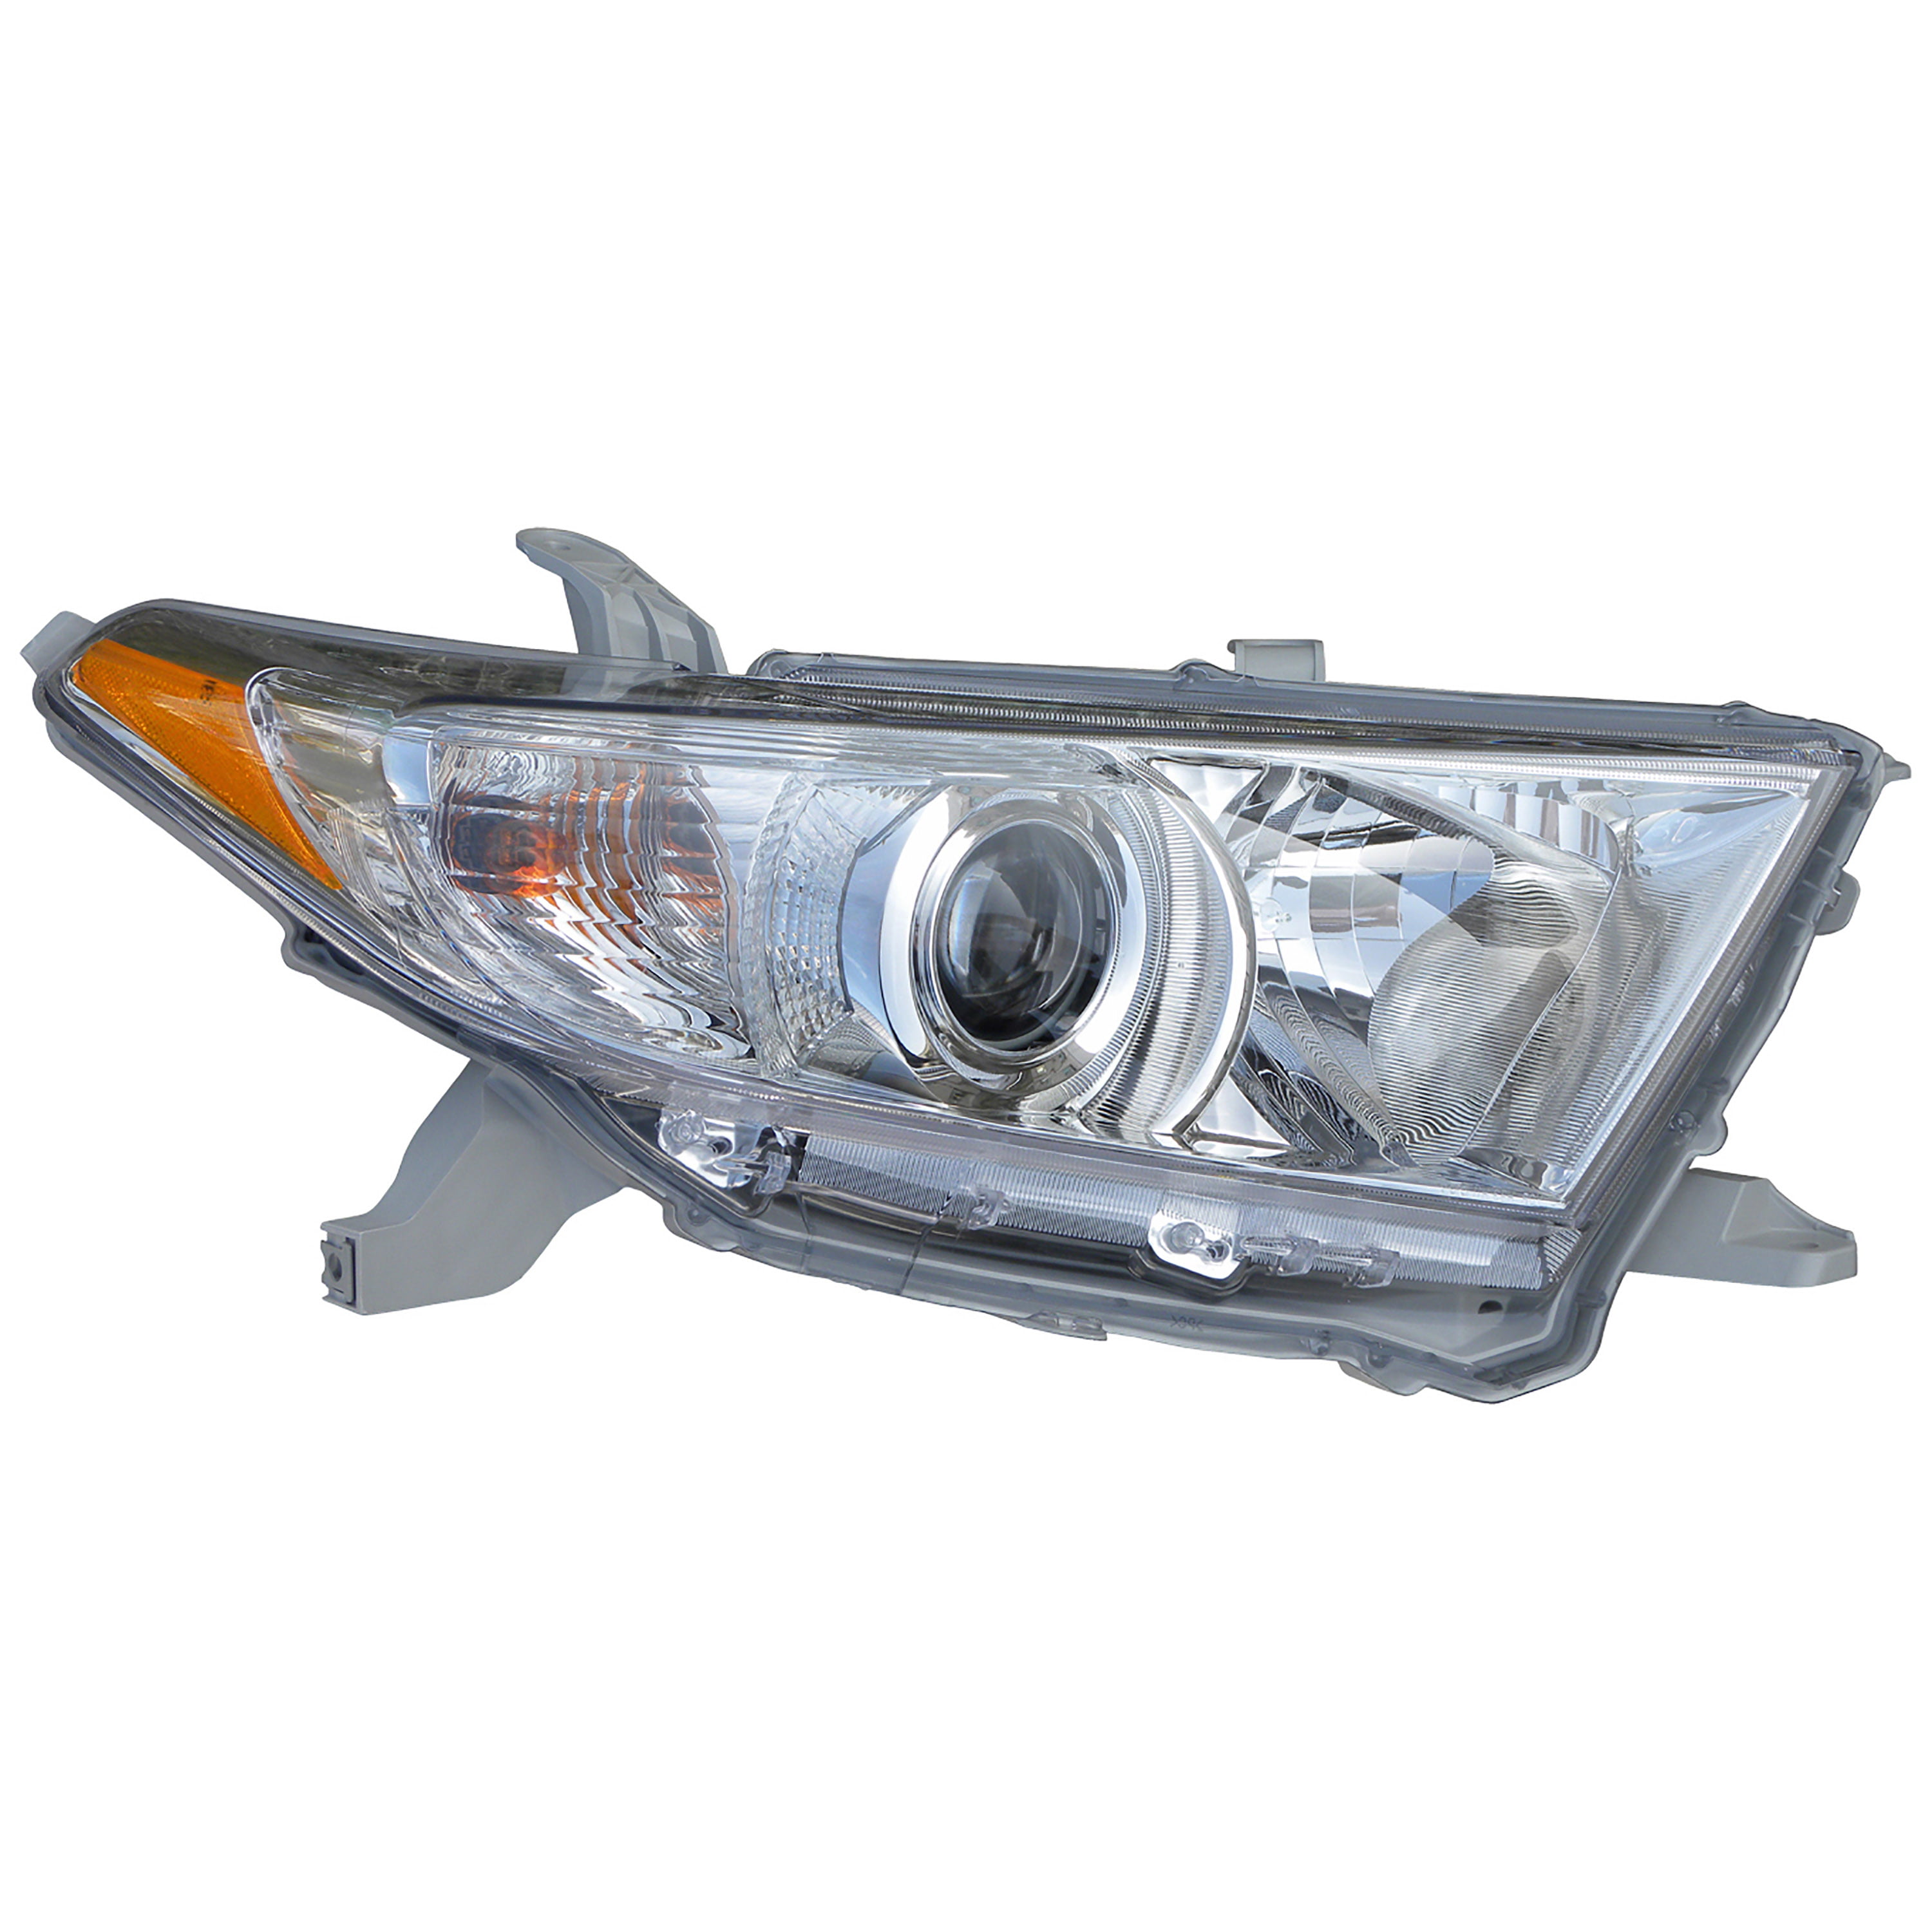 Dorman 1592301 Driver Side Headlight Assembly For Select Nissan Models 